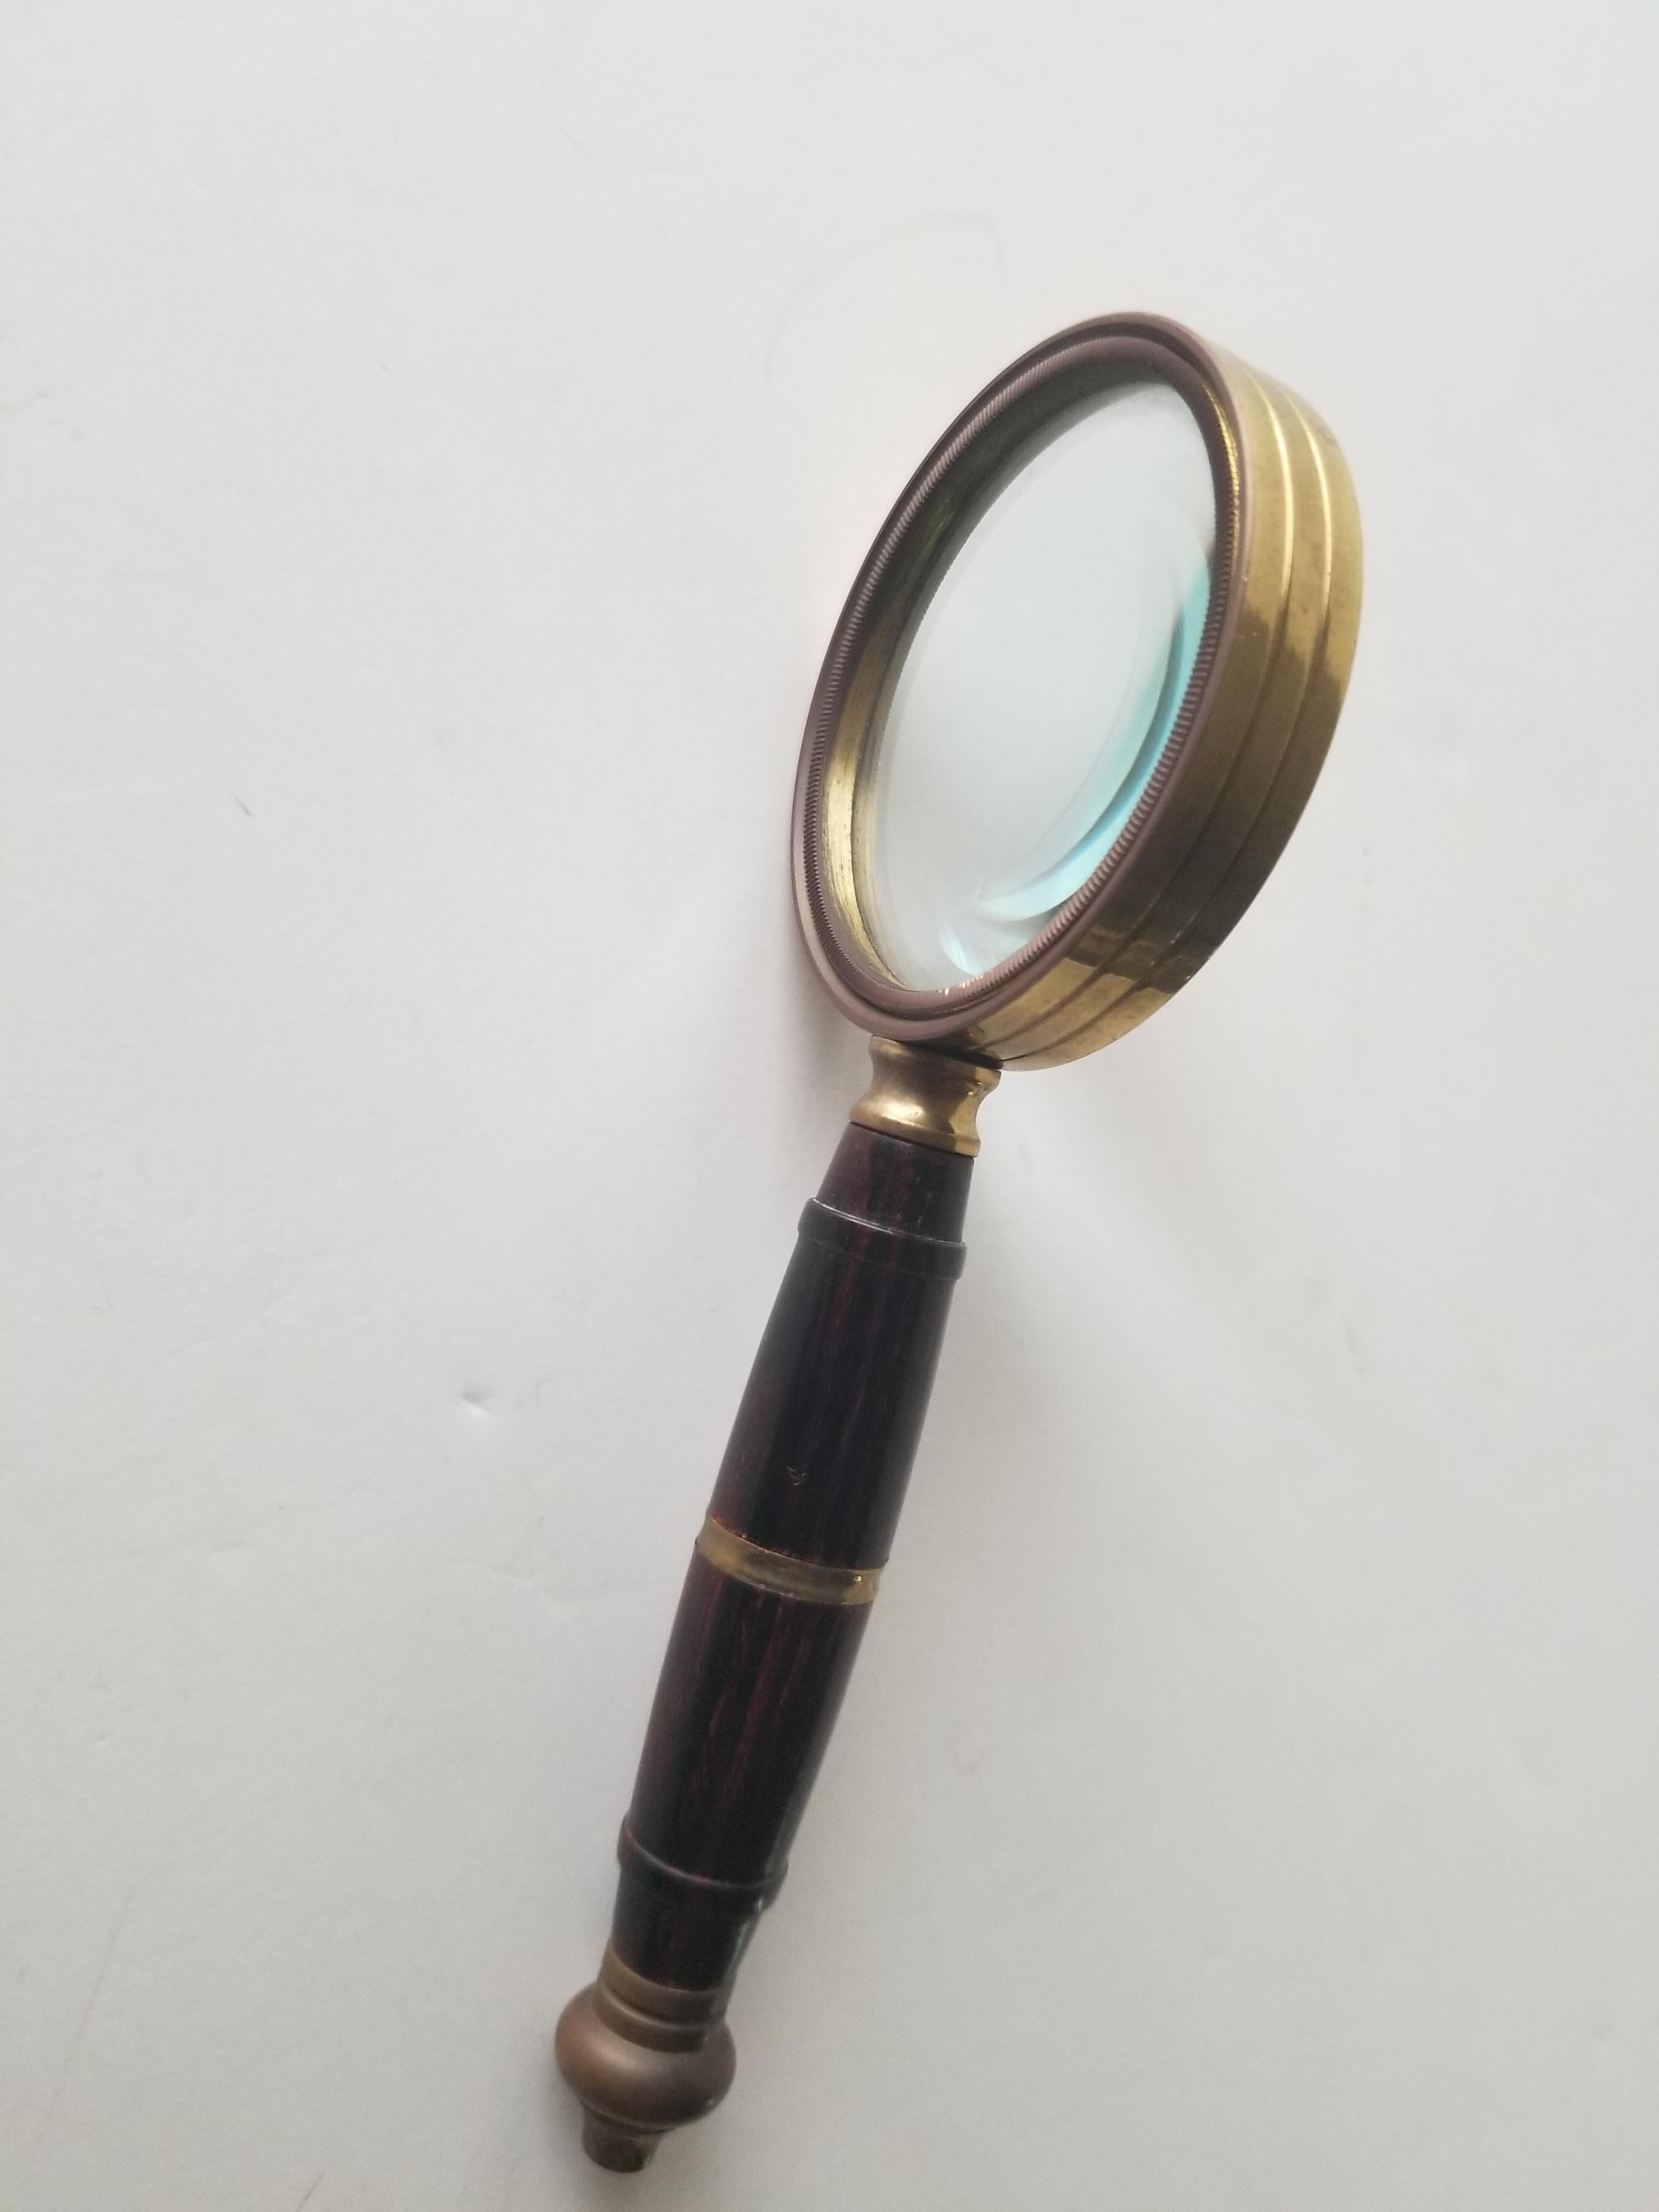 Metal Handheld Petite Magnifying Glass Antique Vintage Sculptural Brass